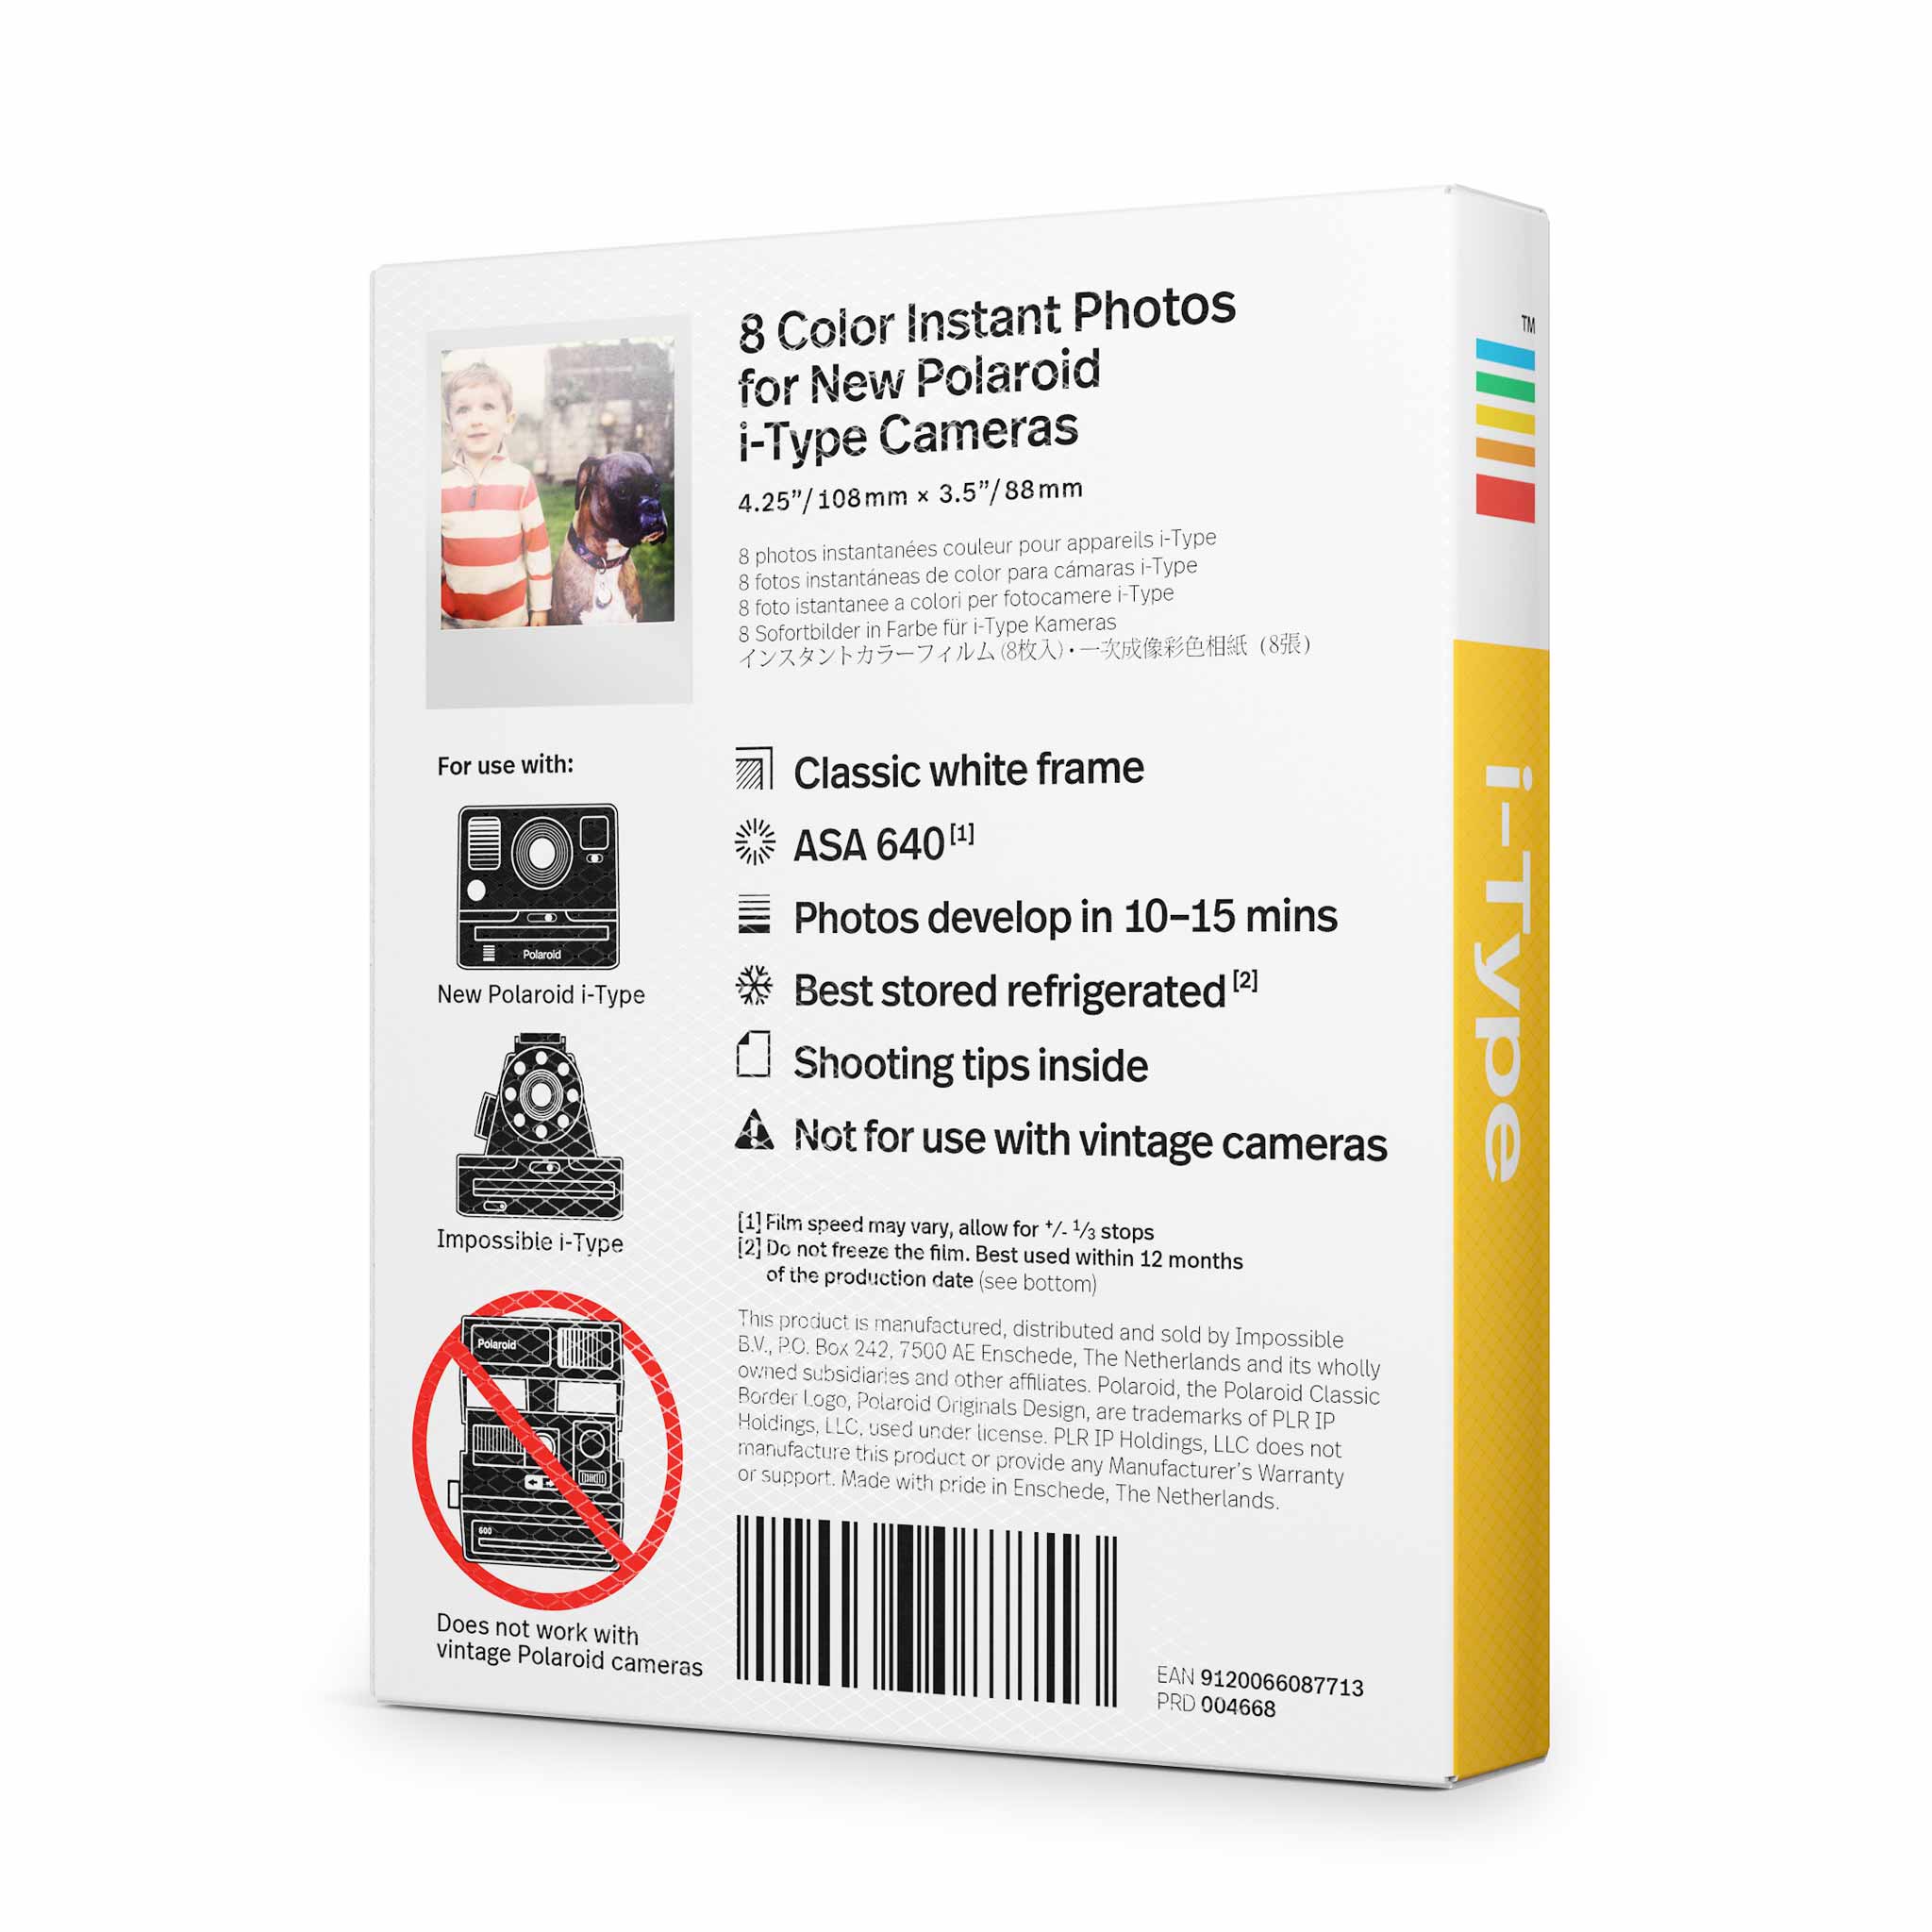 Polaroid Color i-Type Film White Frames(6000)